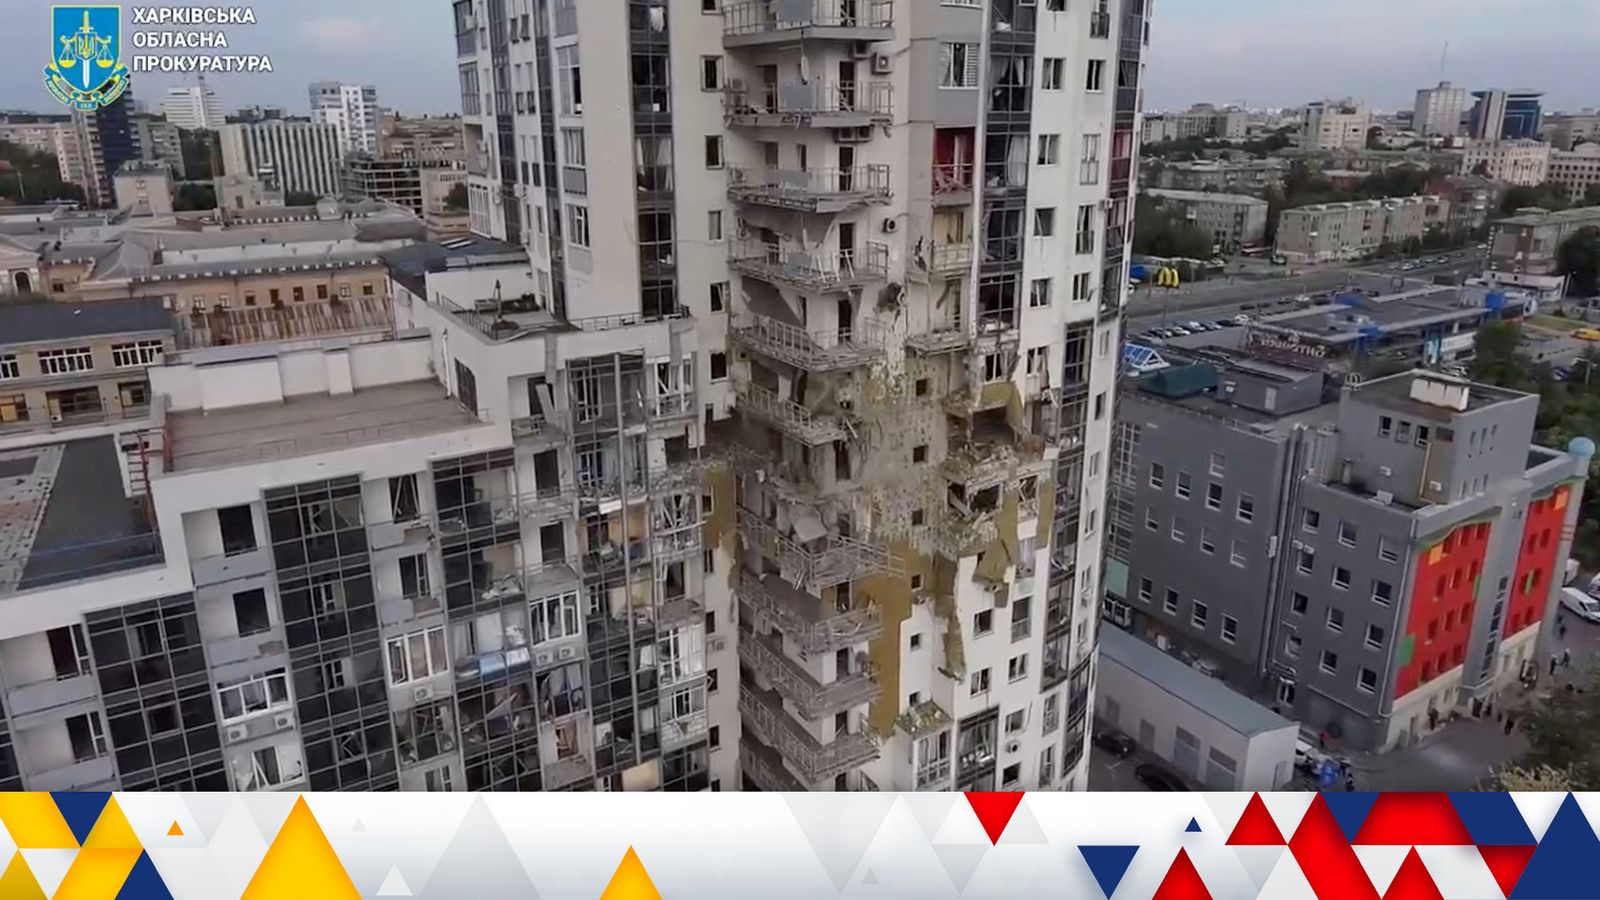 Kharkiv: Ukraine's second city 'under missile attack', mayor says